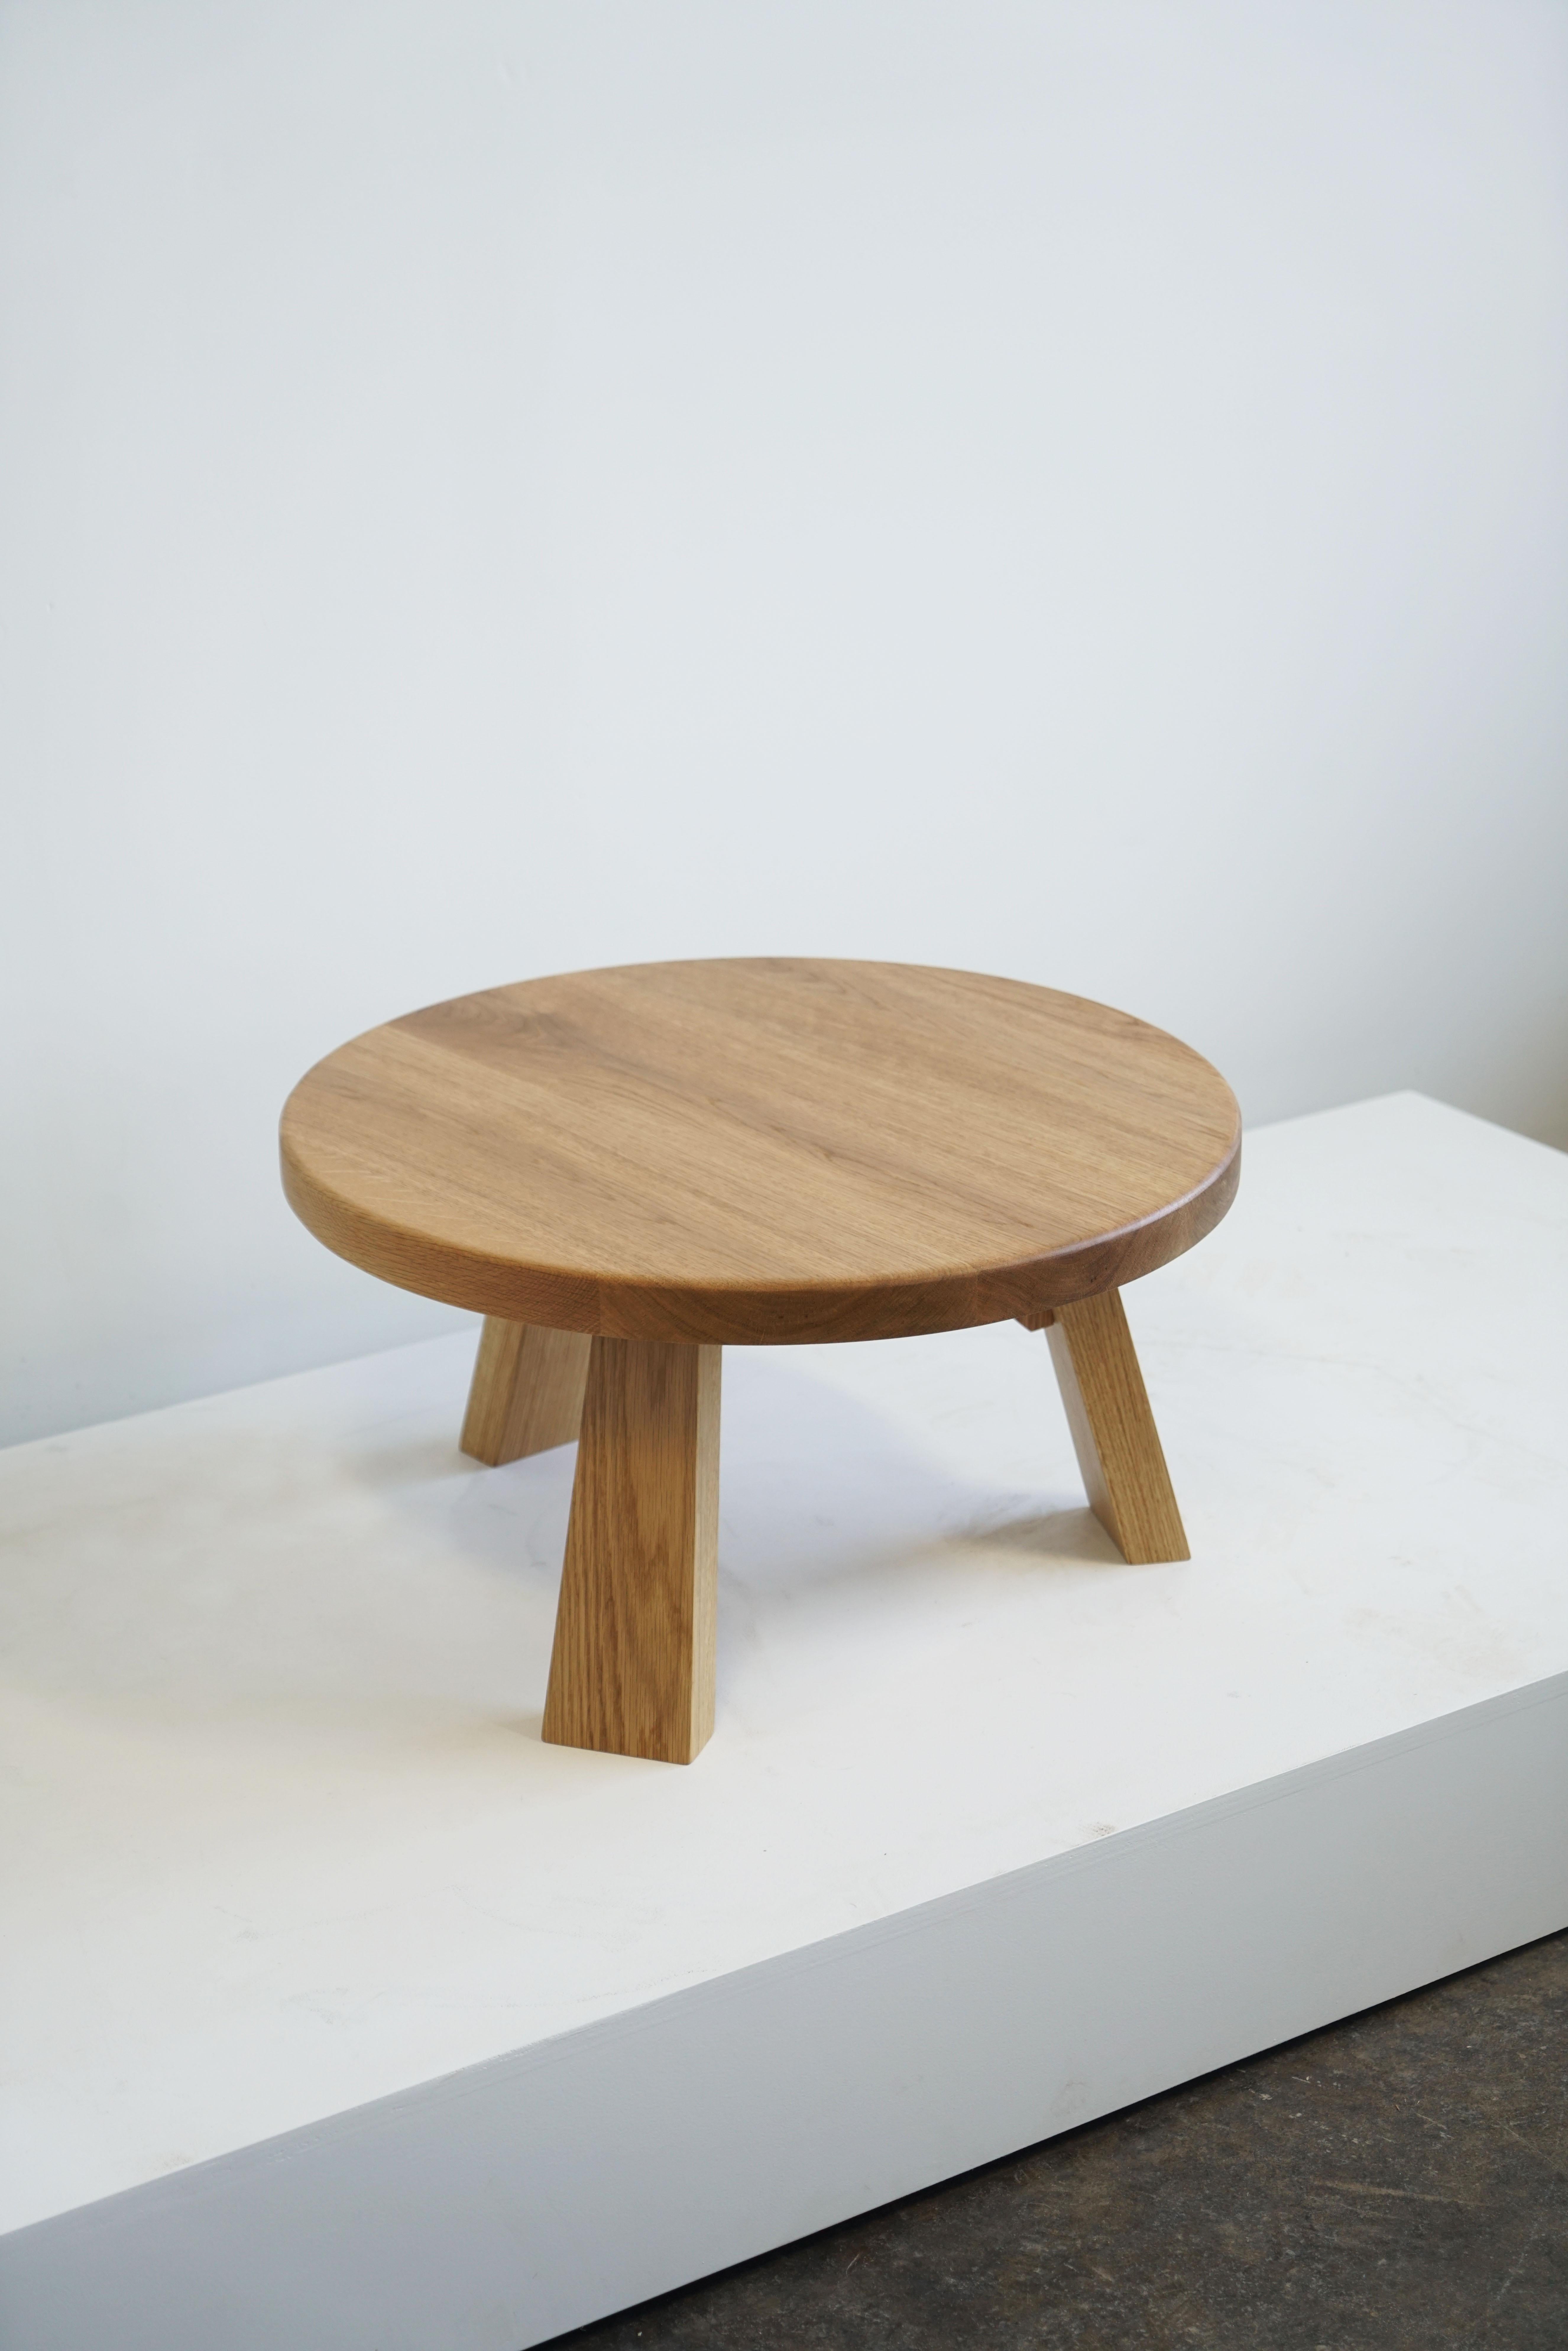 Solid white oak coffee table by Last Workshop, 2023
Three detachable legs.
Measures: 24